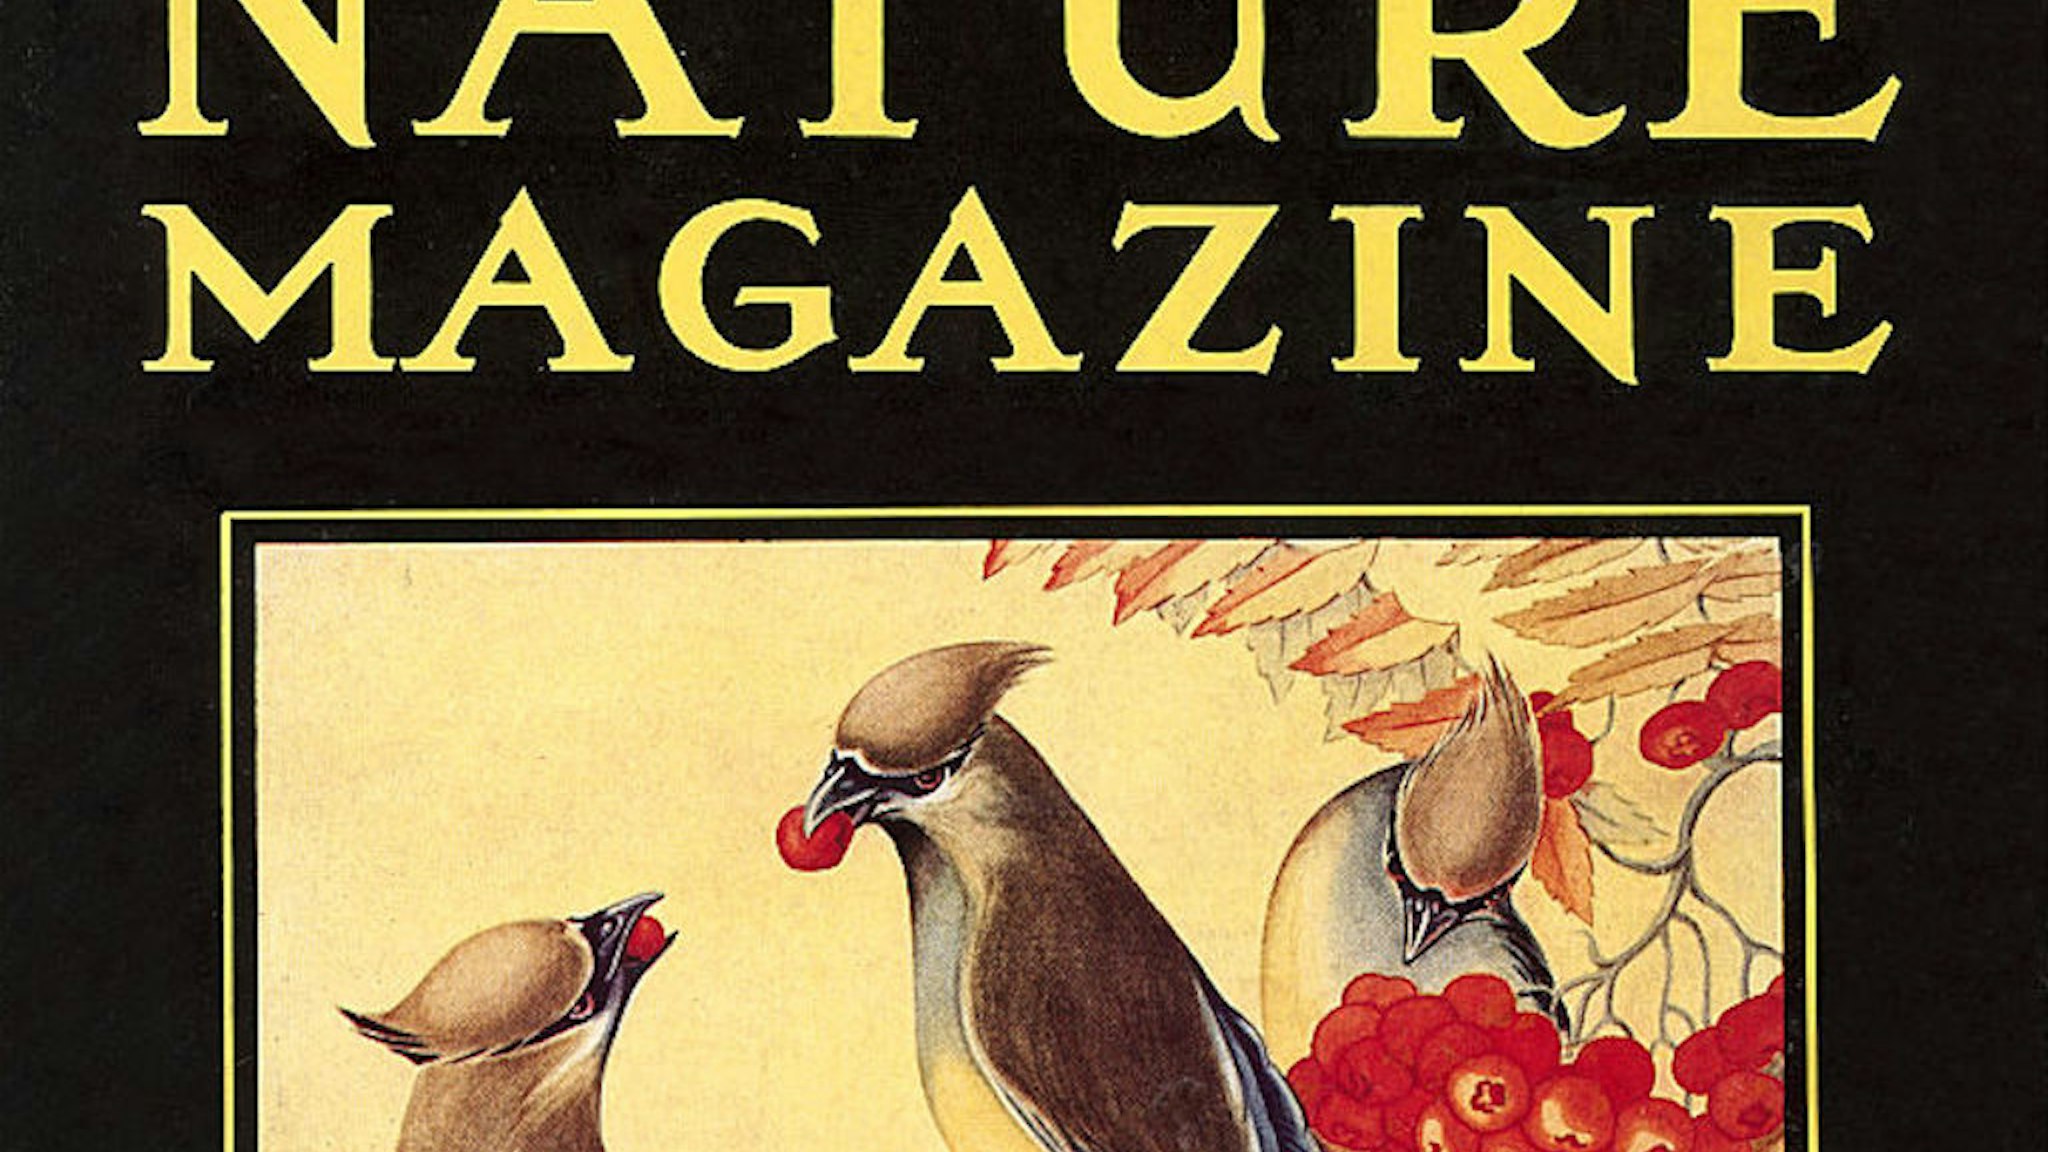 Vintage illustration of Nature Magazine Cover, Birds, 1930s.